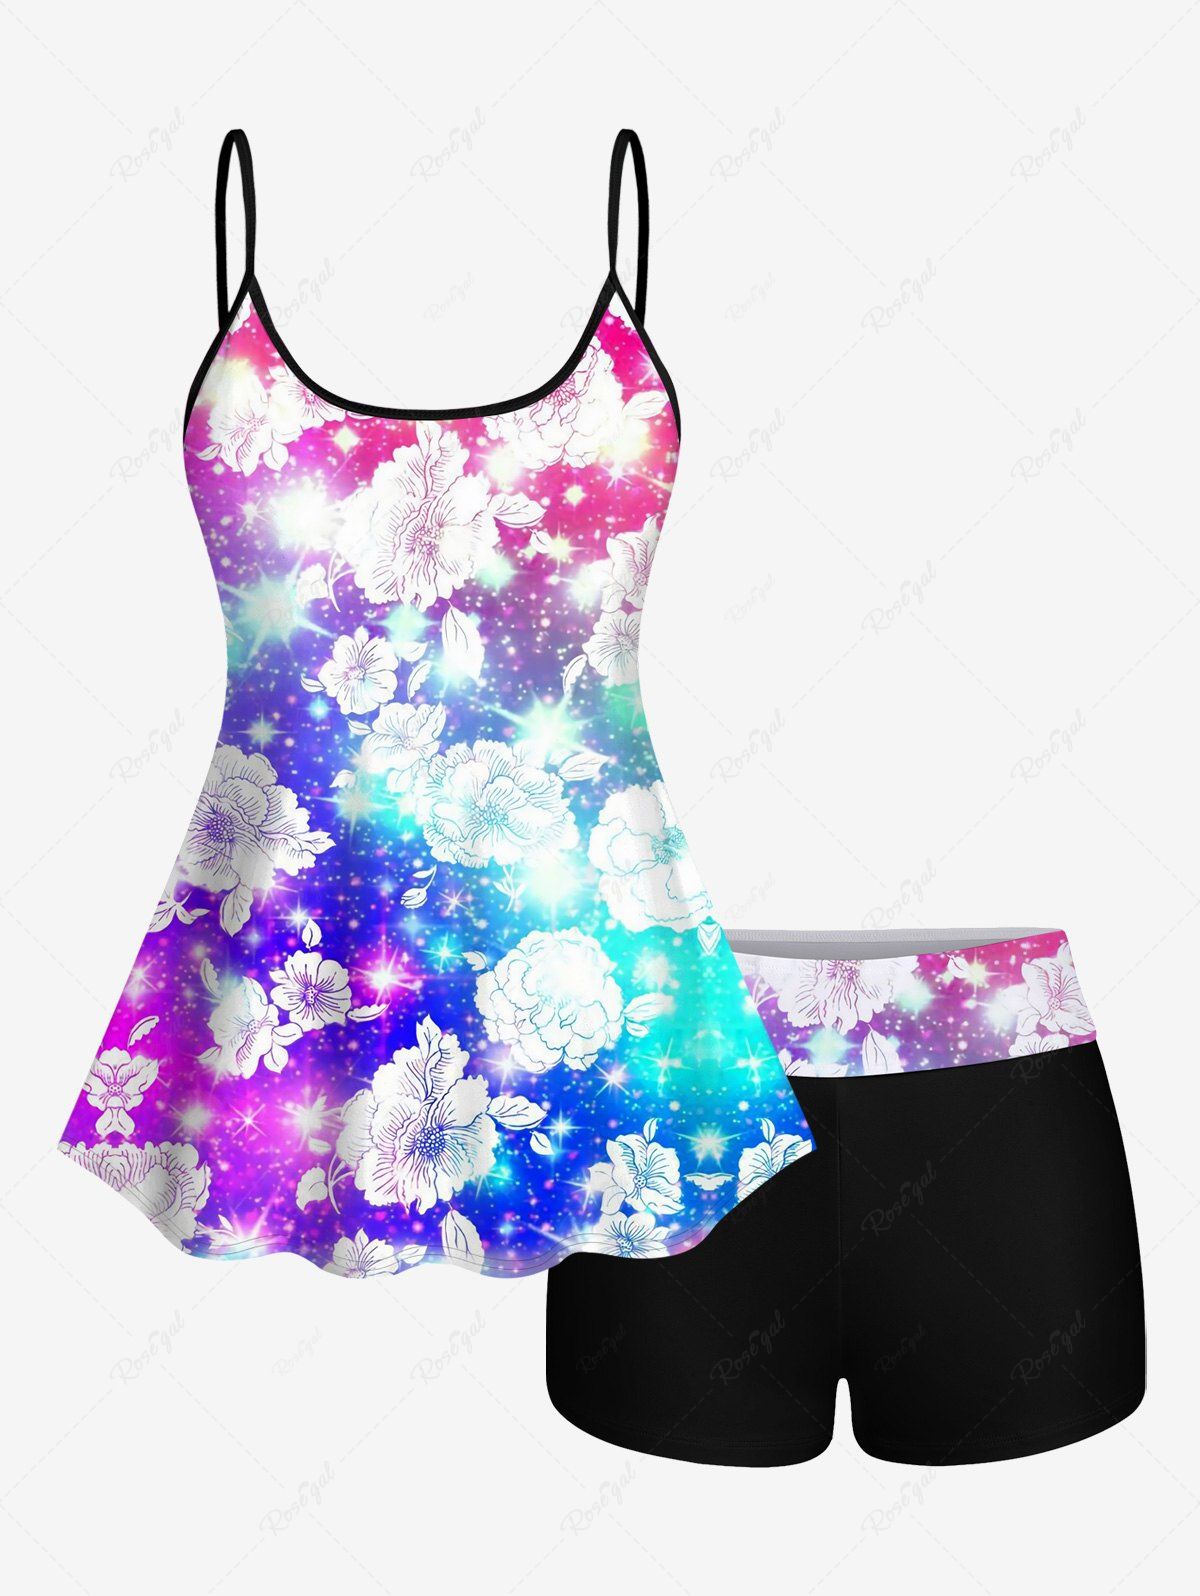 Discount Glitter Sparkling Ombre Galaxy Floral Print Boyleg Tankini Swimsuit (Adjustable Shoulder Strap)  